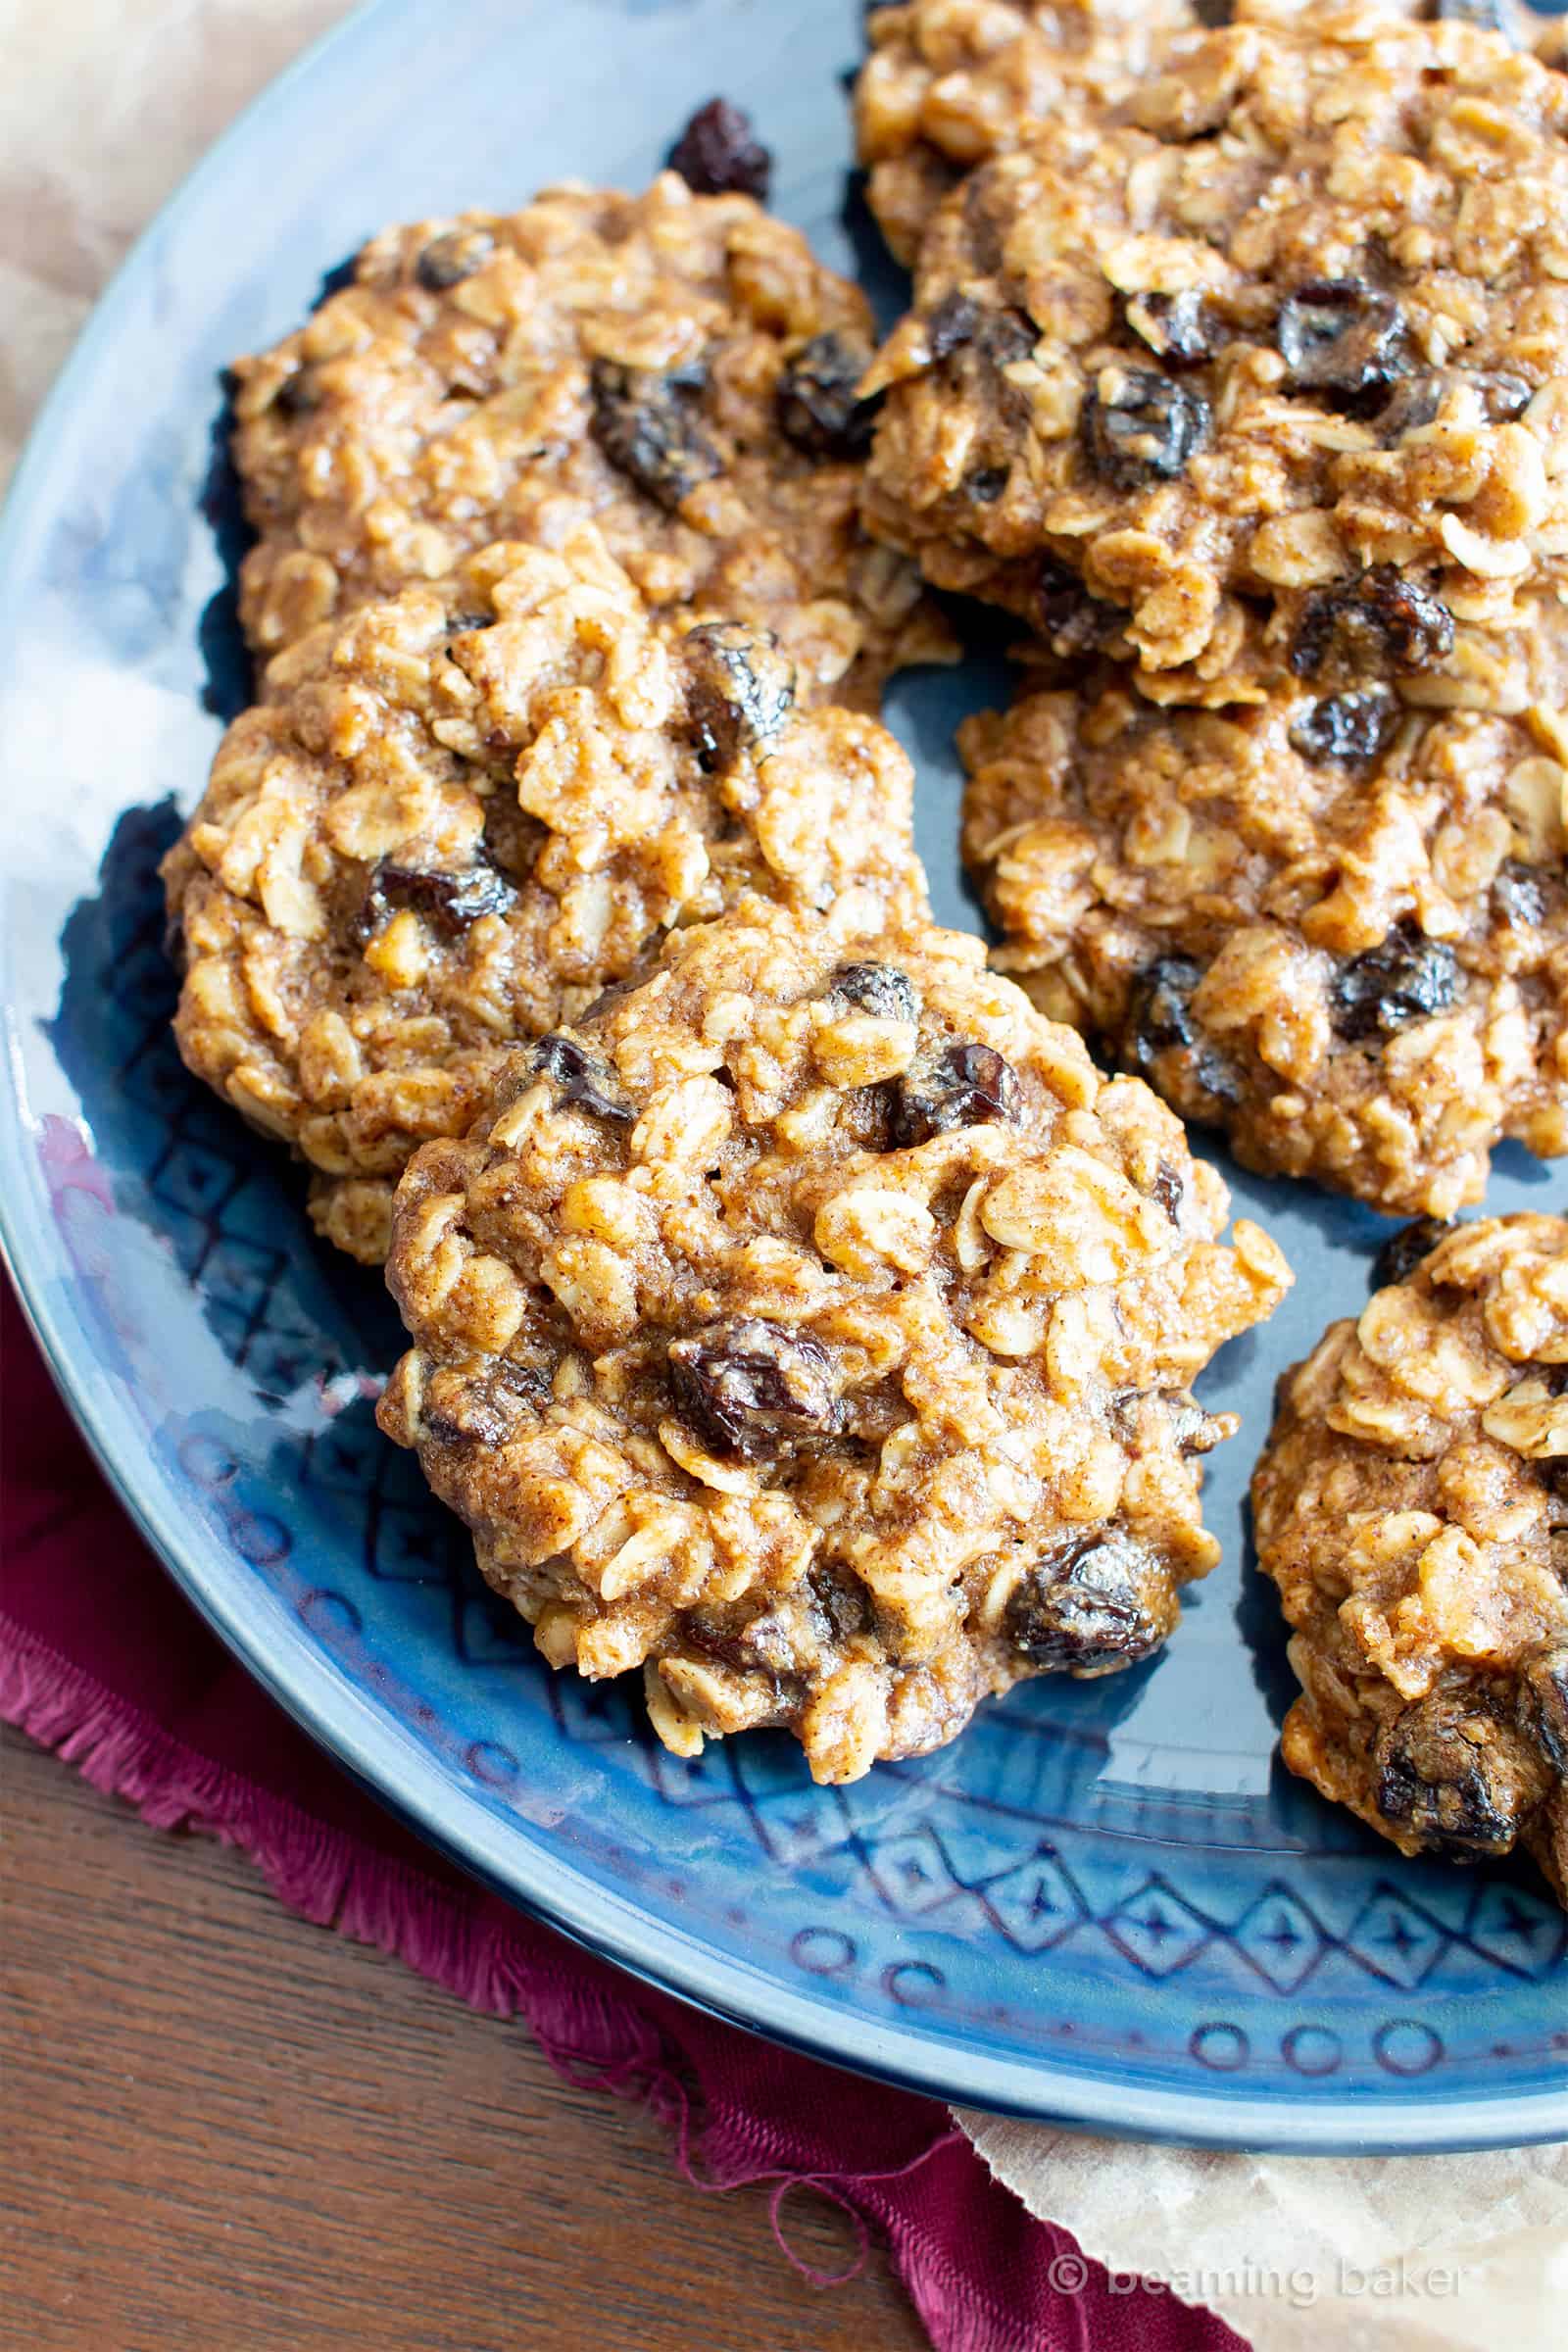 Chewy Oatmeal Raisin Cookie Recipe (V, GF): my favorite easy recipe for moist and chewy oatmeal cookies bursting with plump raisins and amazing flavor! #Vegan #GlutenFree #OatmealRaisin #Cookies #DairyFree #Healthy #HealthyCookies | Recipe at BeamingBaker.com